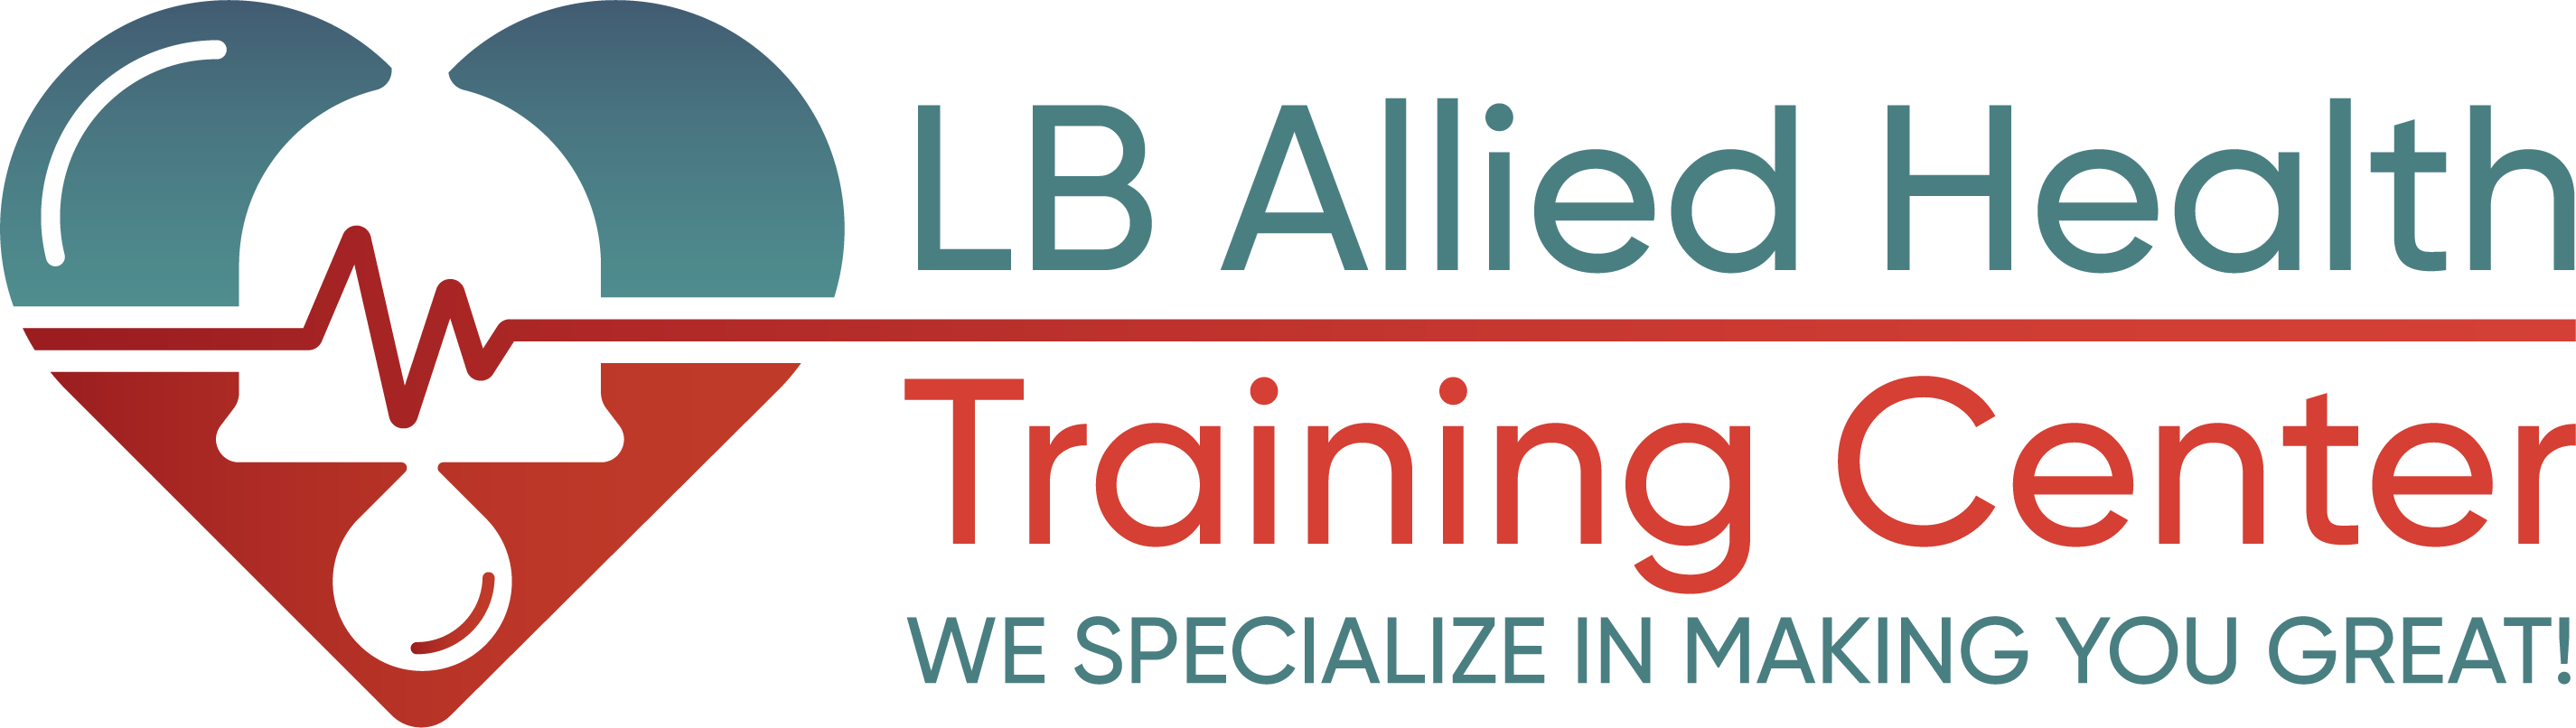 LB Allied Health Training Center